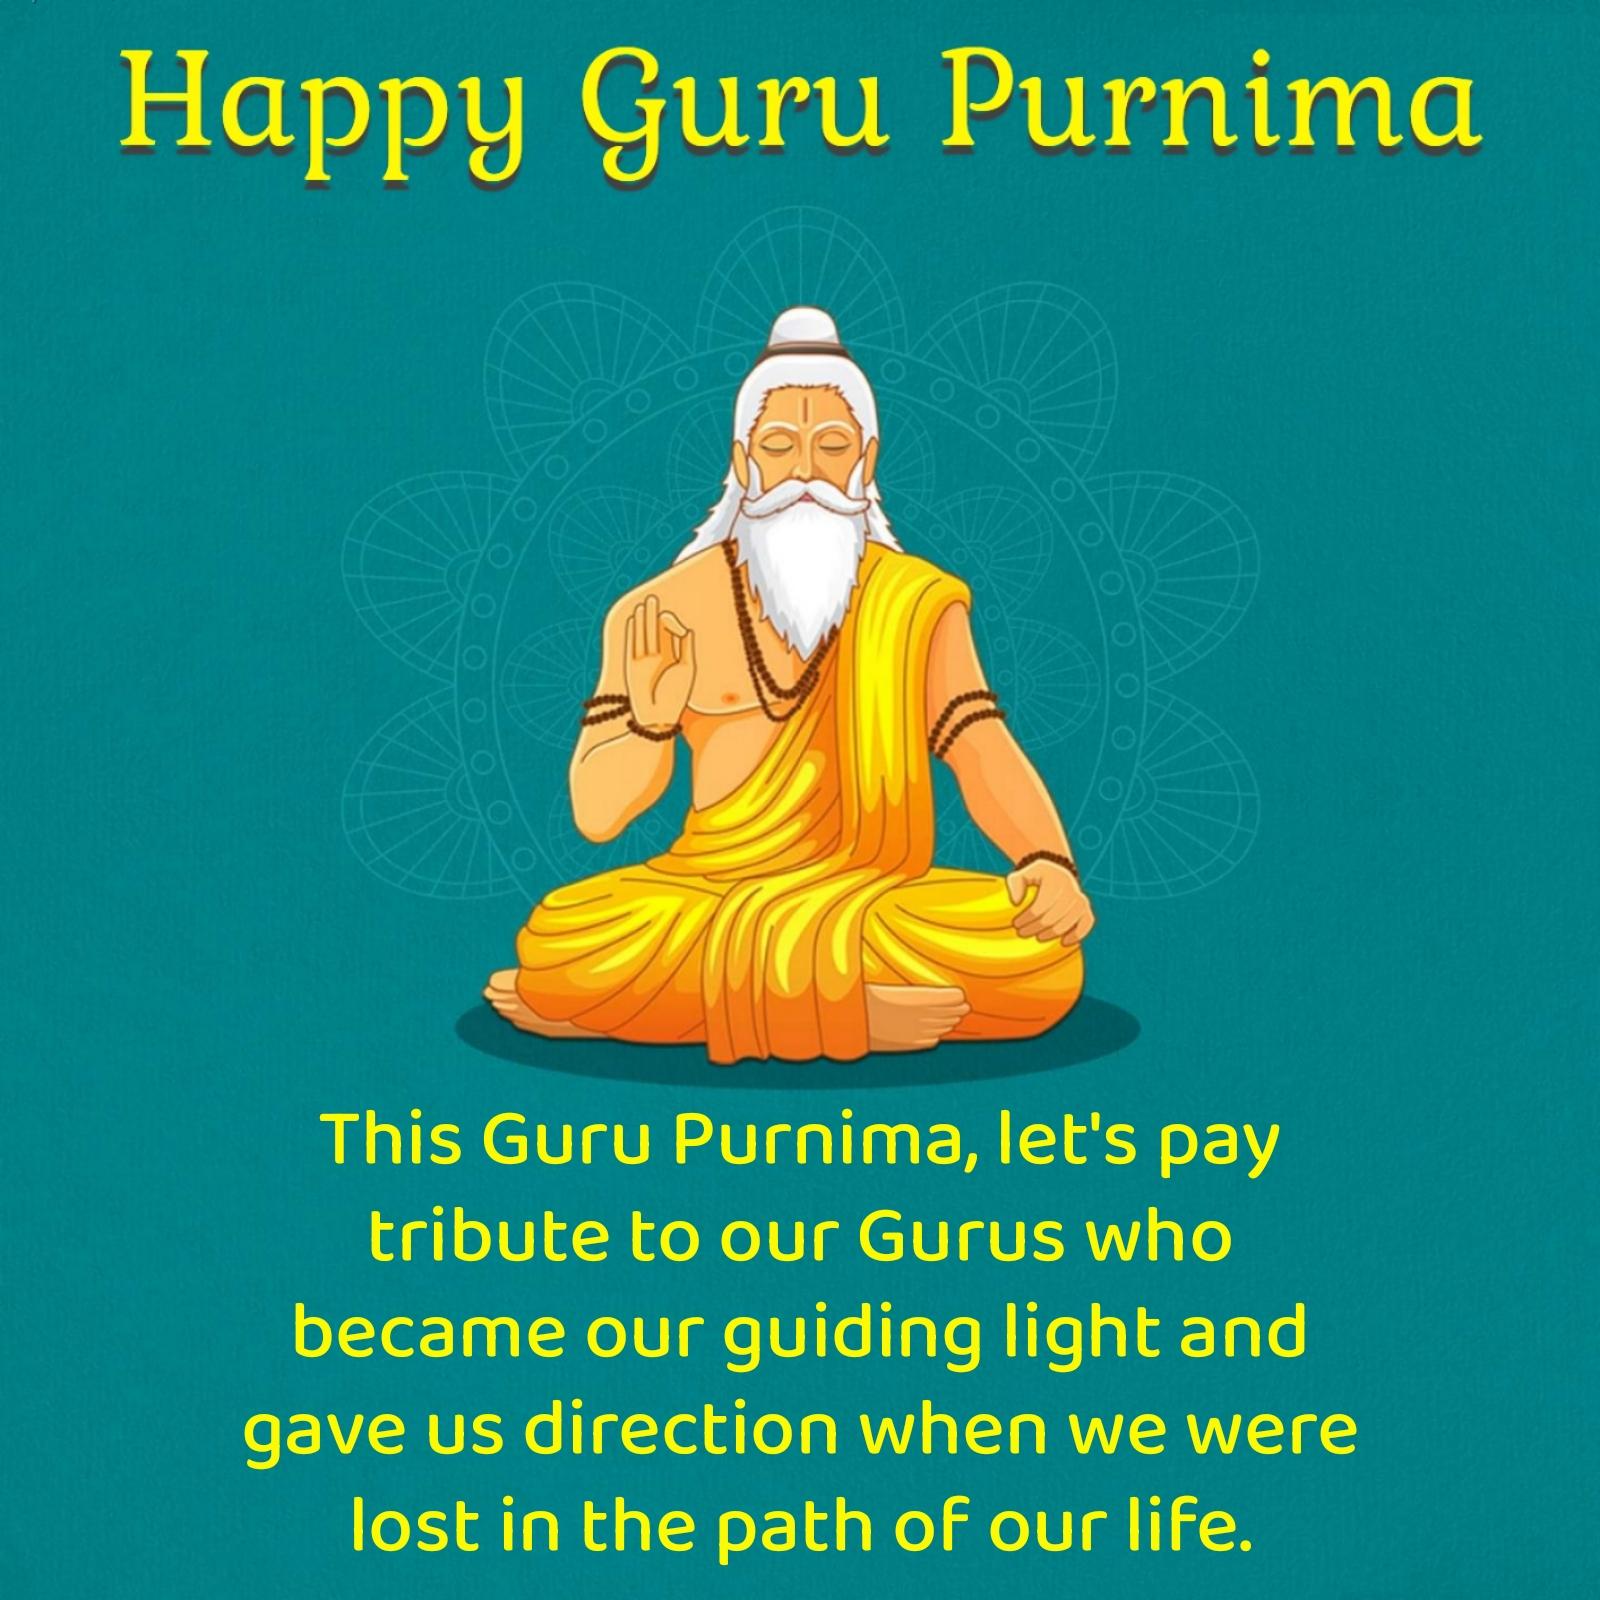 This Guru Purnima let's pay tribute to our Gurus